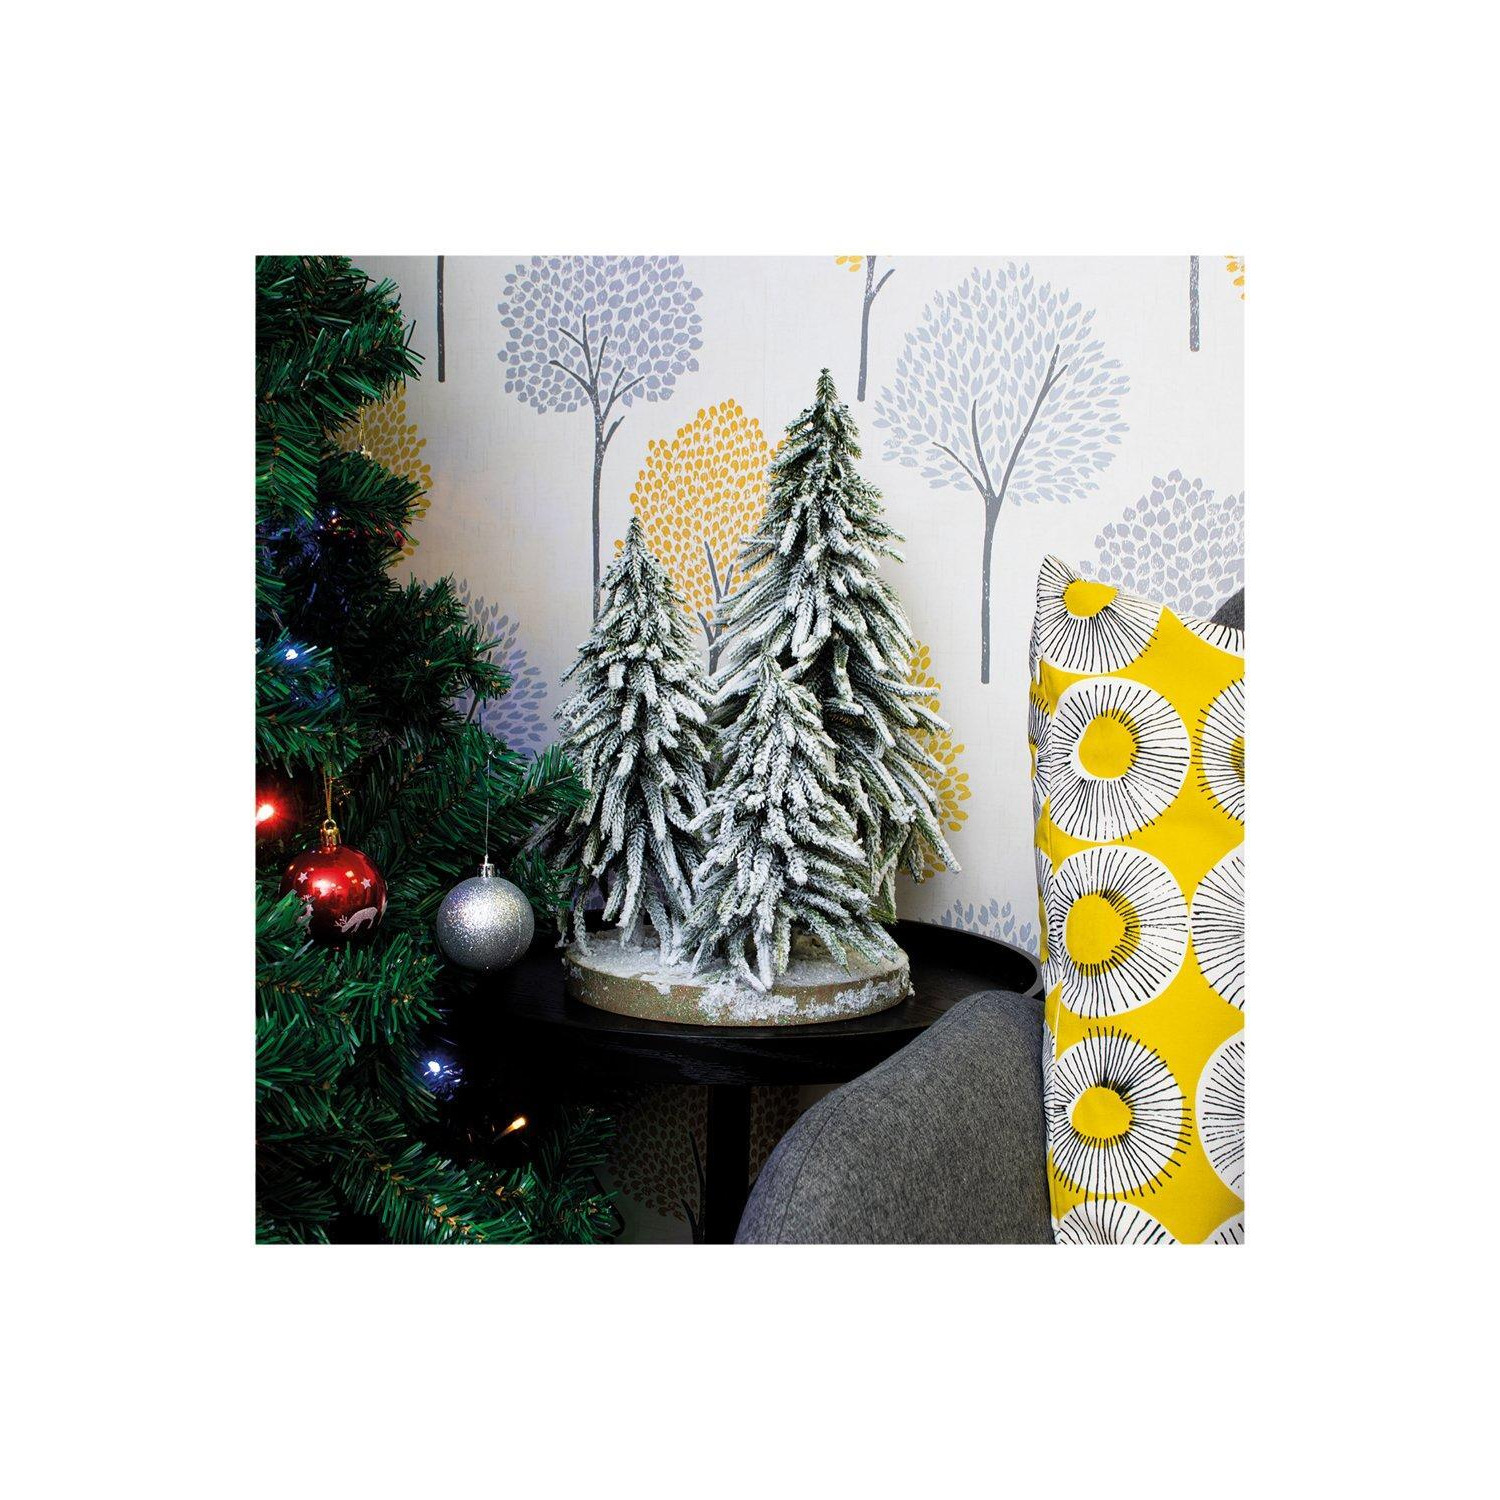 Decorative Snow Topped Mini Christmas Tree Display on Plinth - image 1